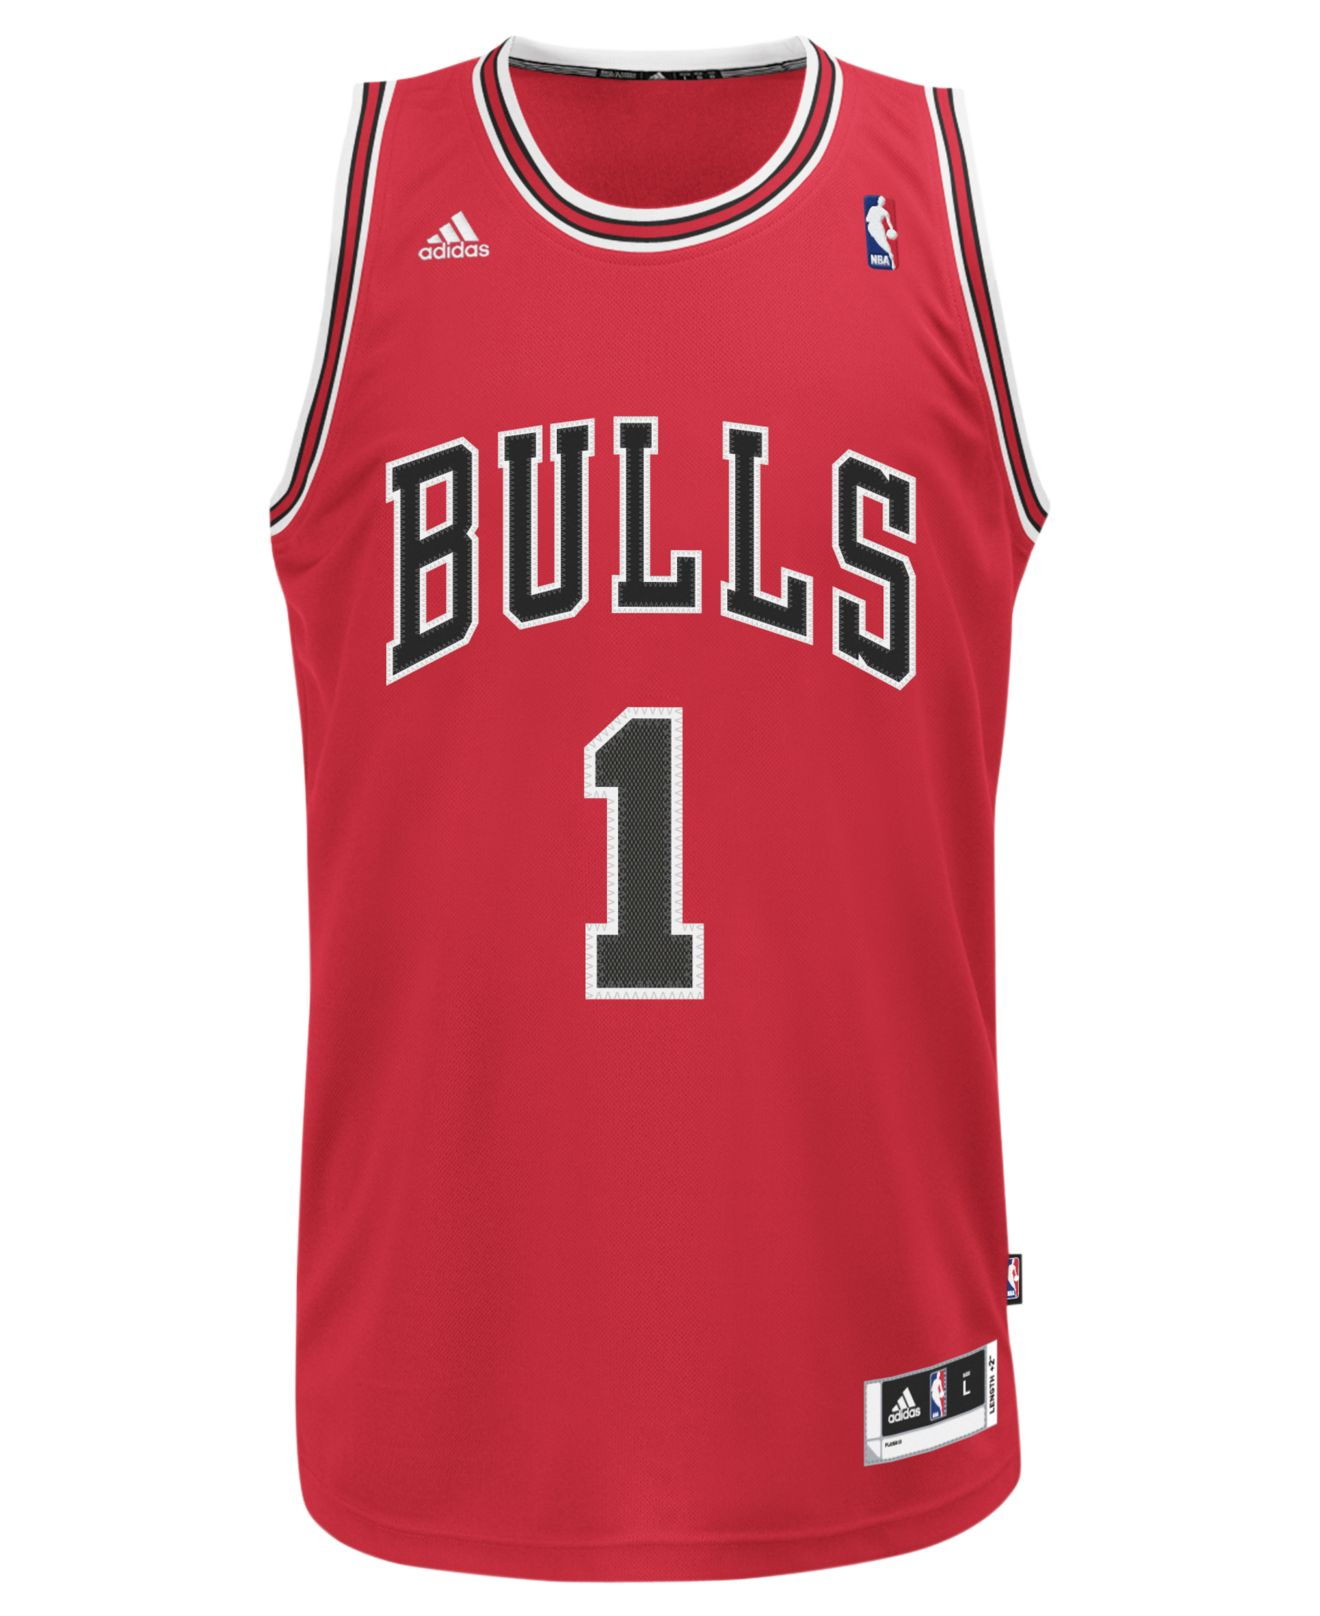 adidas Chicago Bulls Derrick Rose Revolution 30 Swingman Jersey in Red for Men - Lyst1320 x 1616